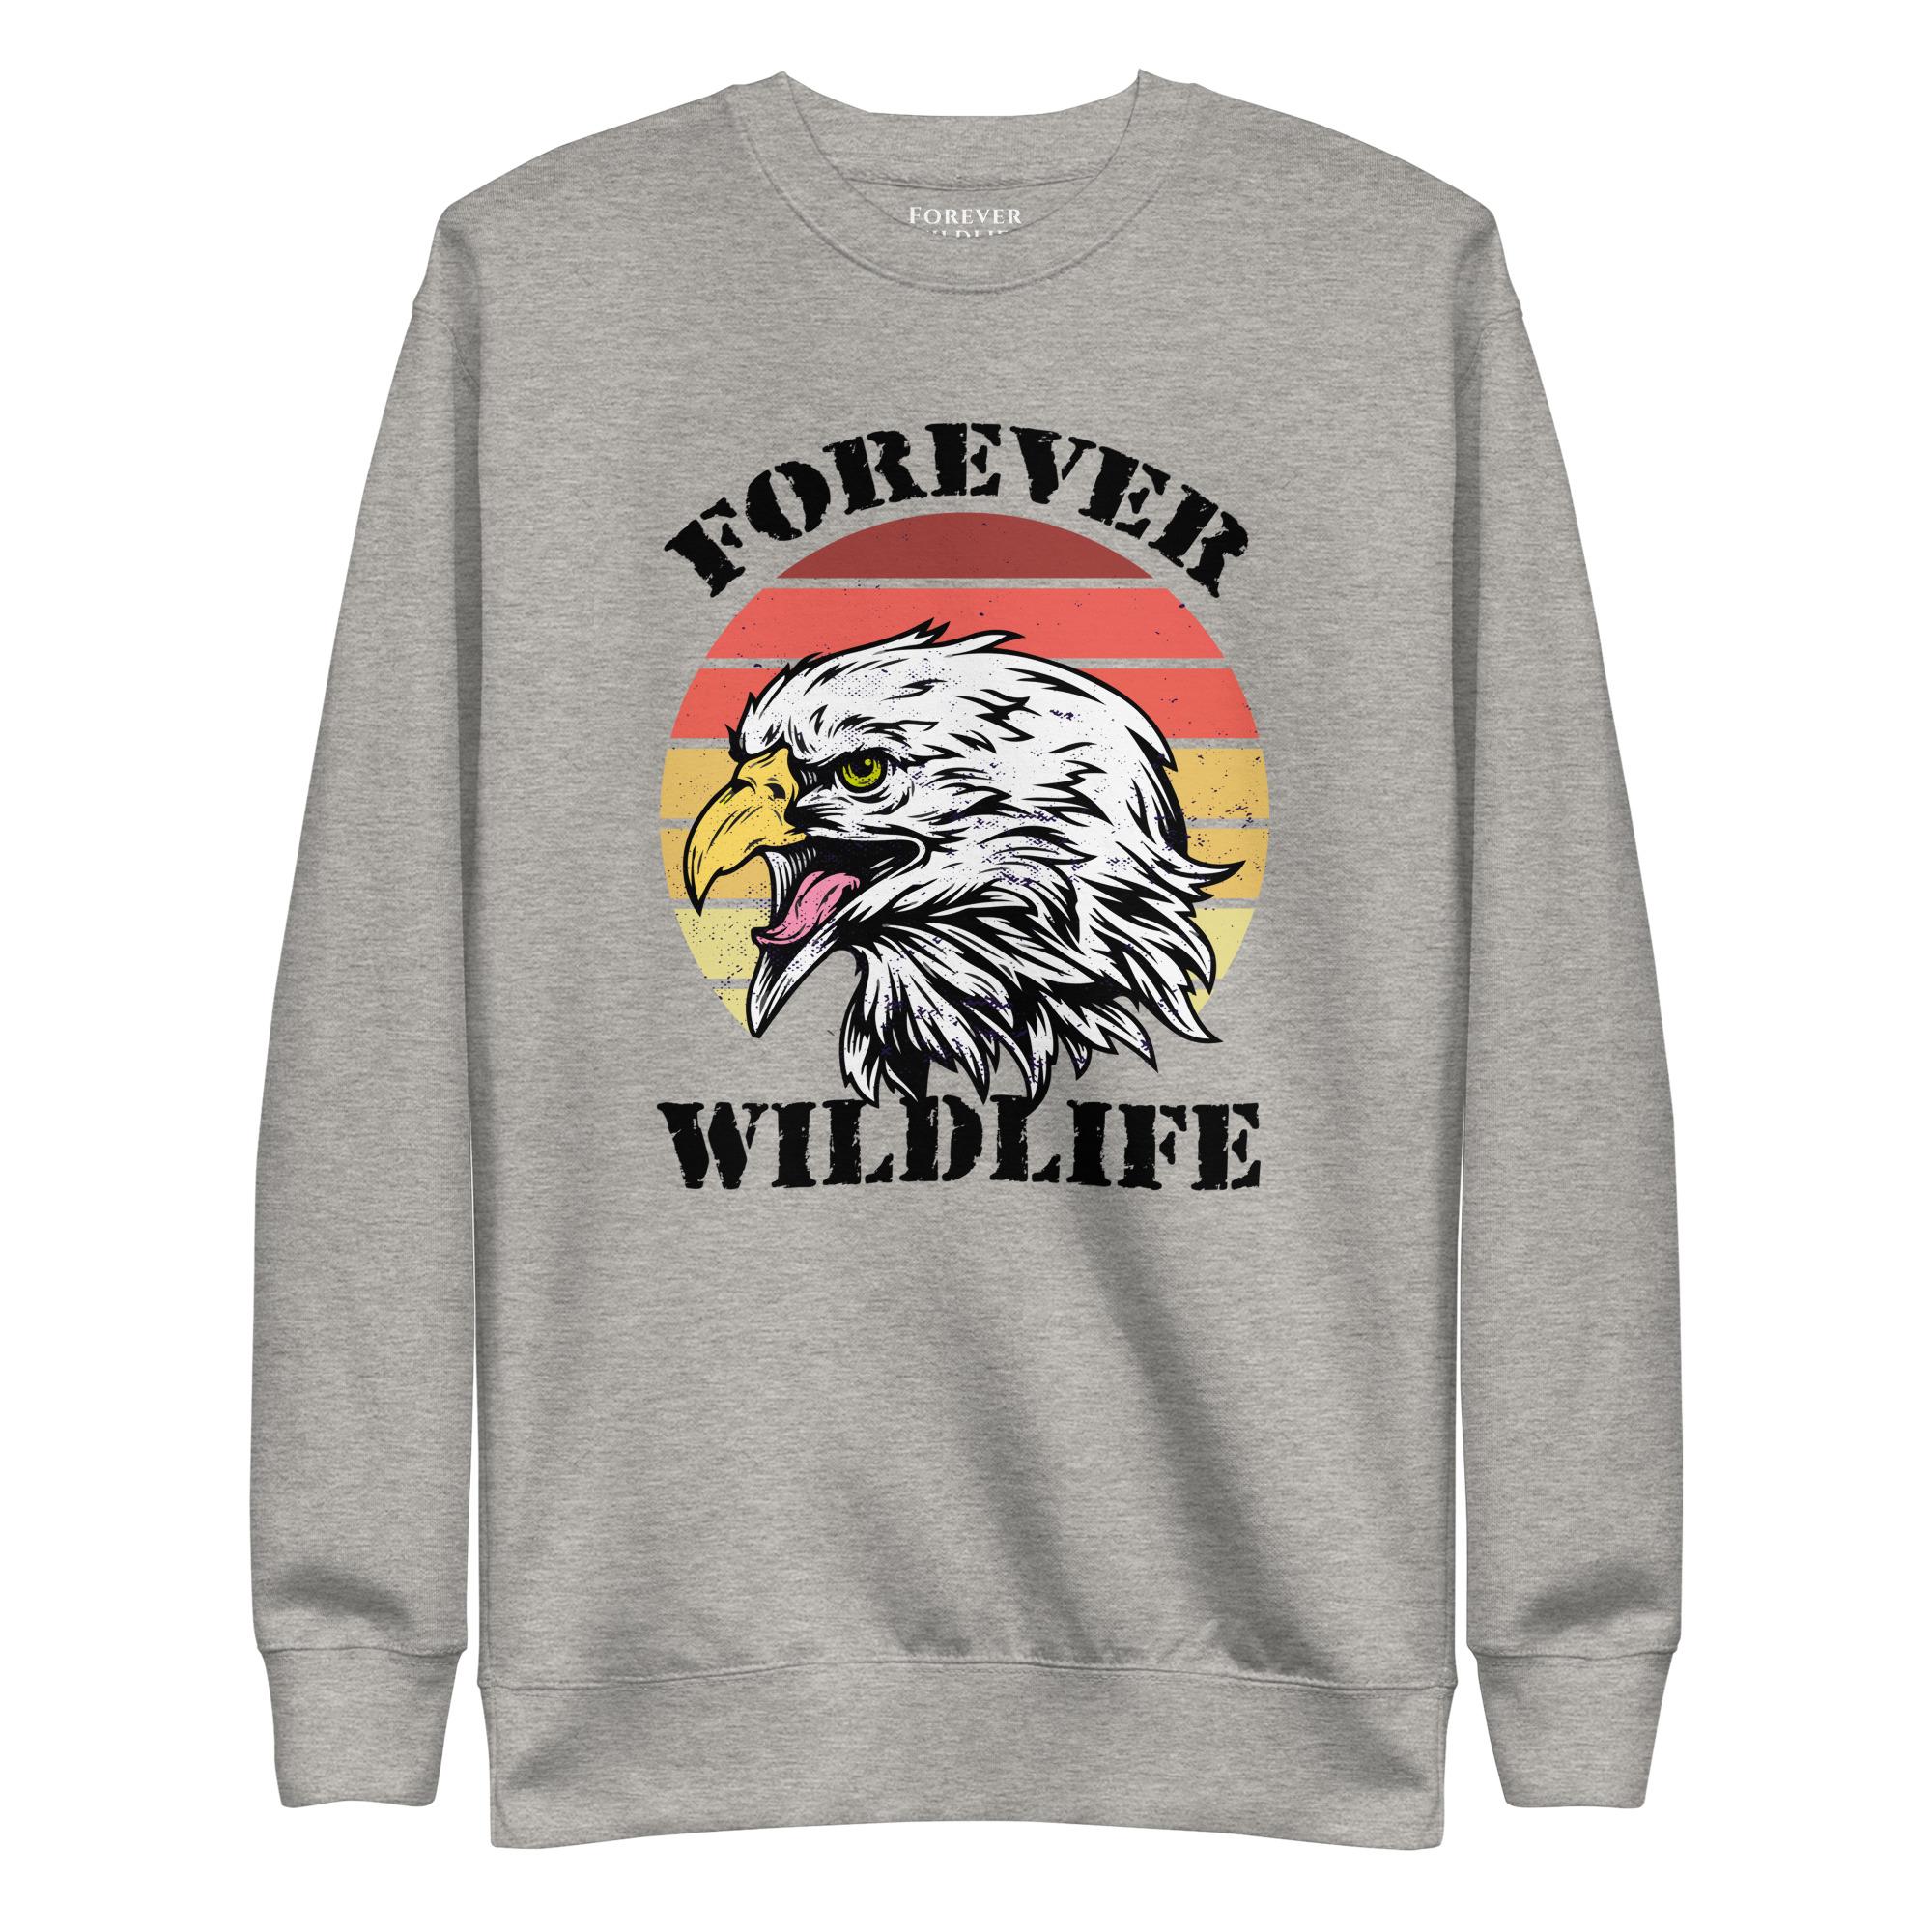 Eagle Sweatshirt in Grey-Premium Wildlife Animal Inspiration Sweatshirt Design, part of Wildlife Sweatshirts & Clothing from Forever Wildlife.